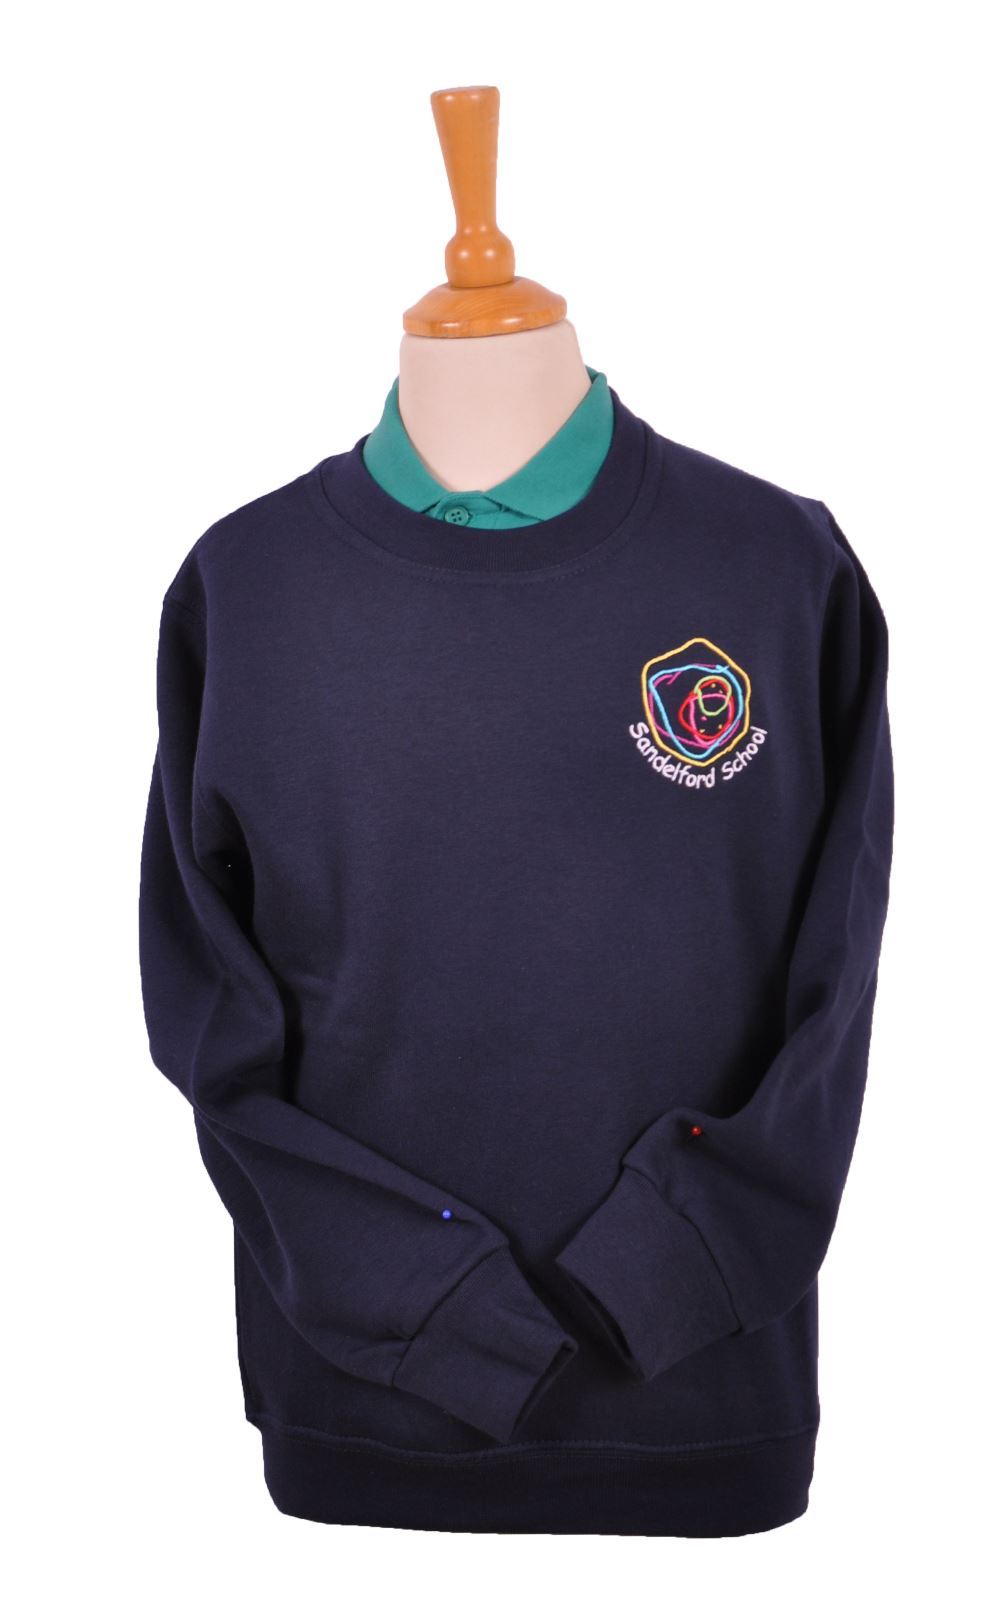 Picture of Sandelford School Sweatshirt - Blue Max